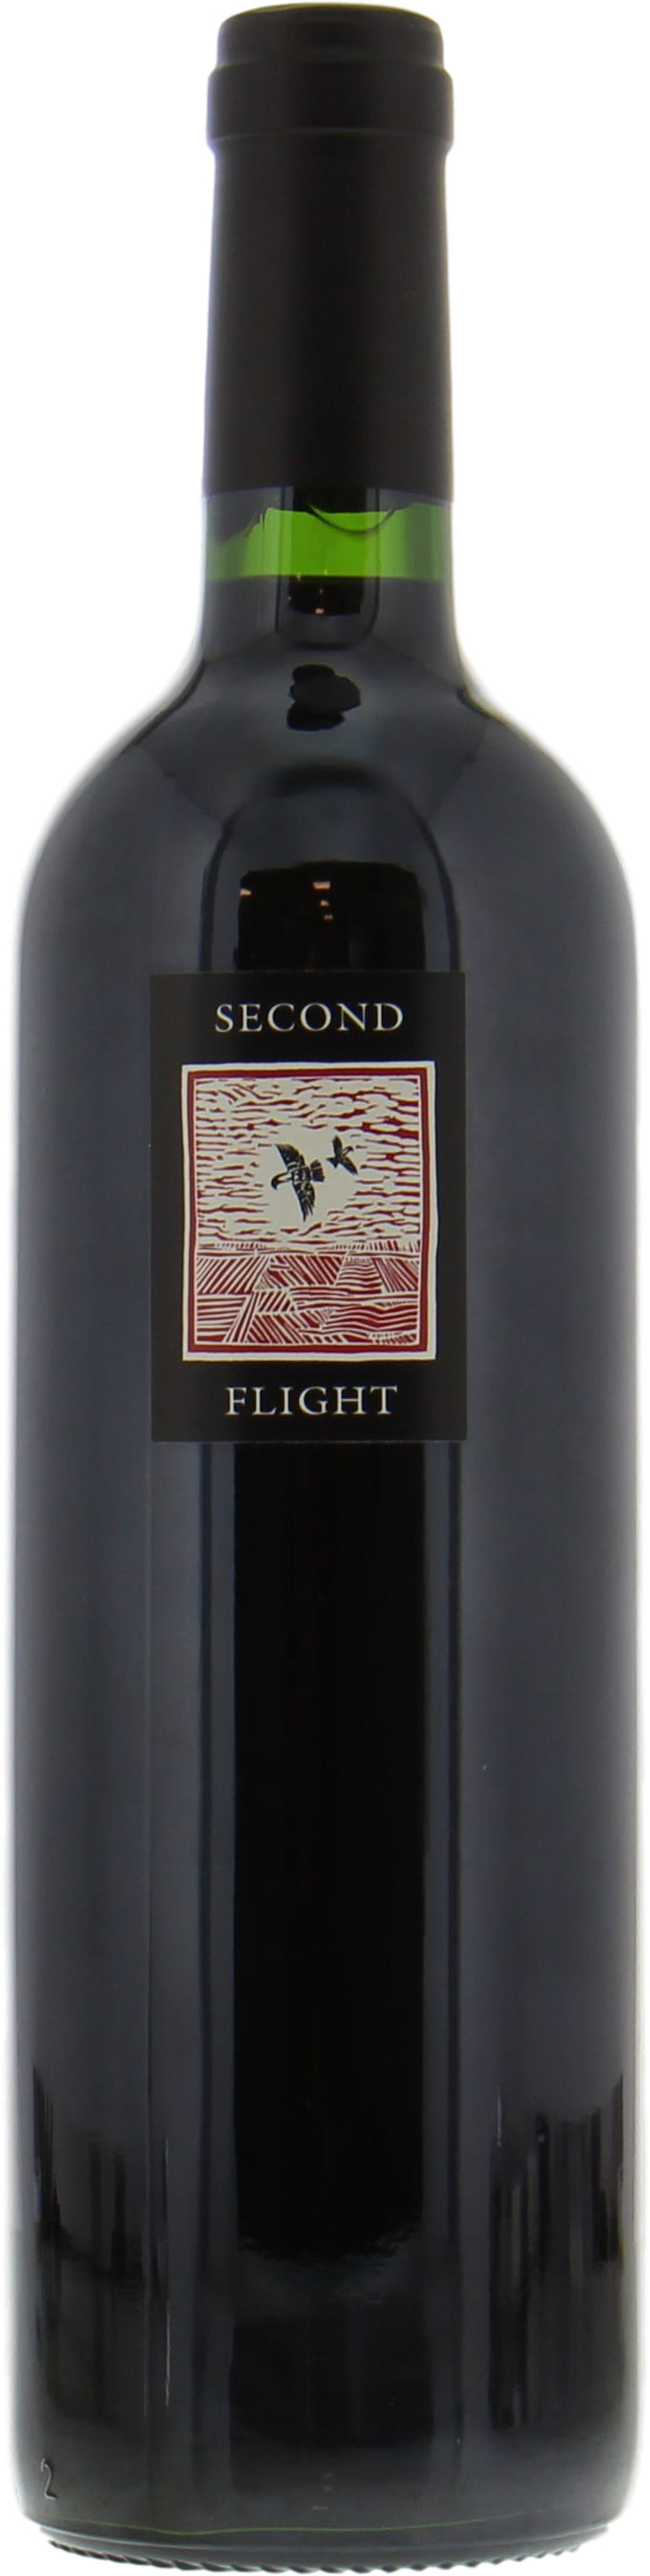 Screaming Eagle - Second Flight 2006